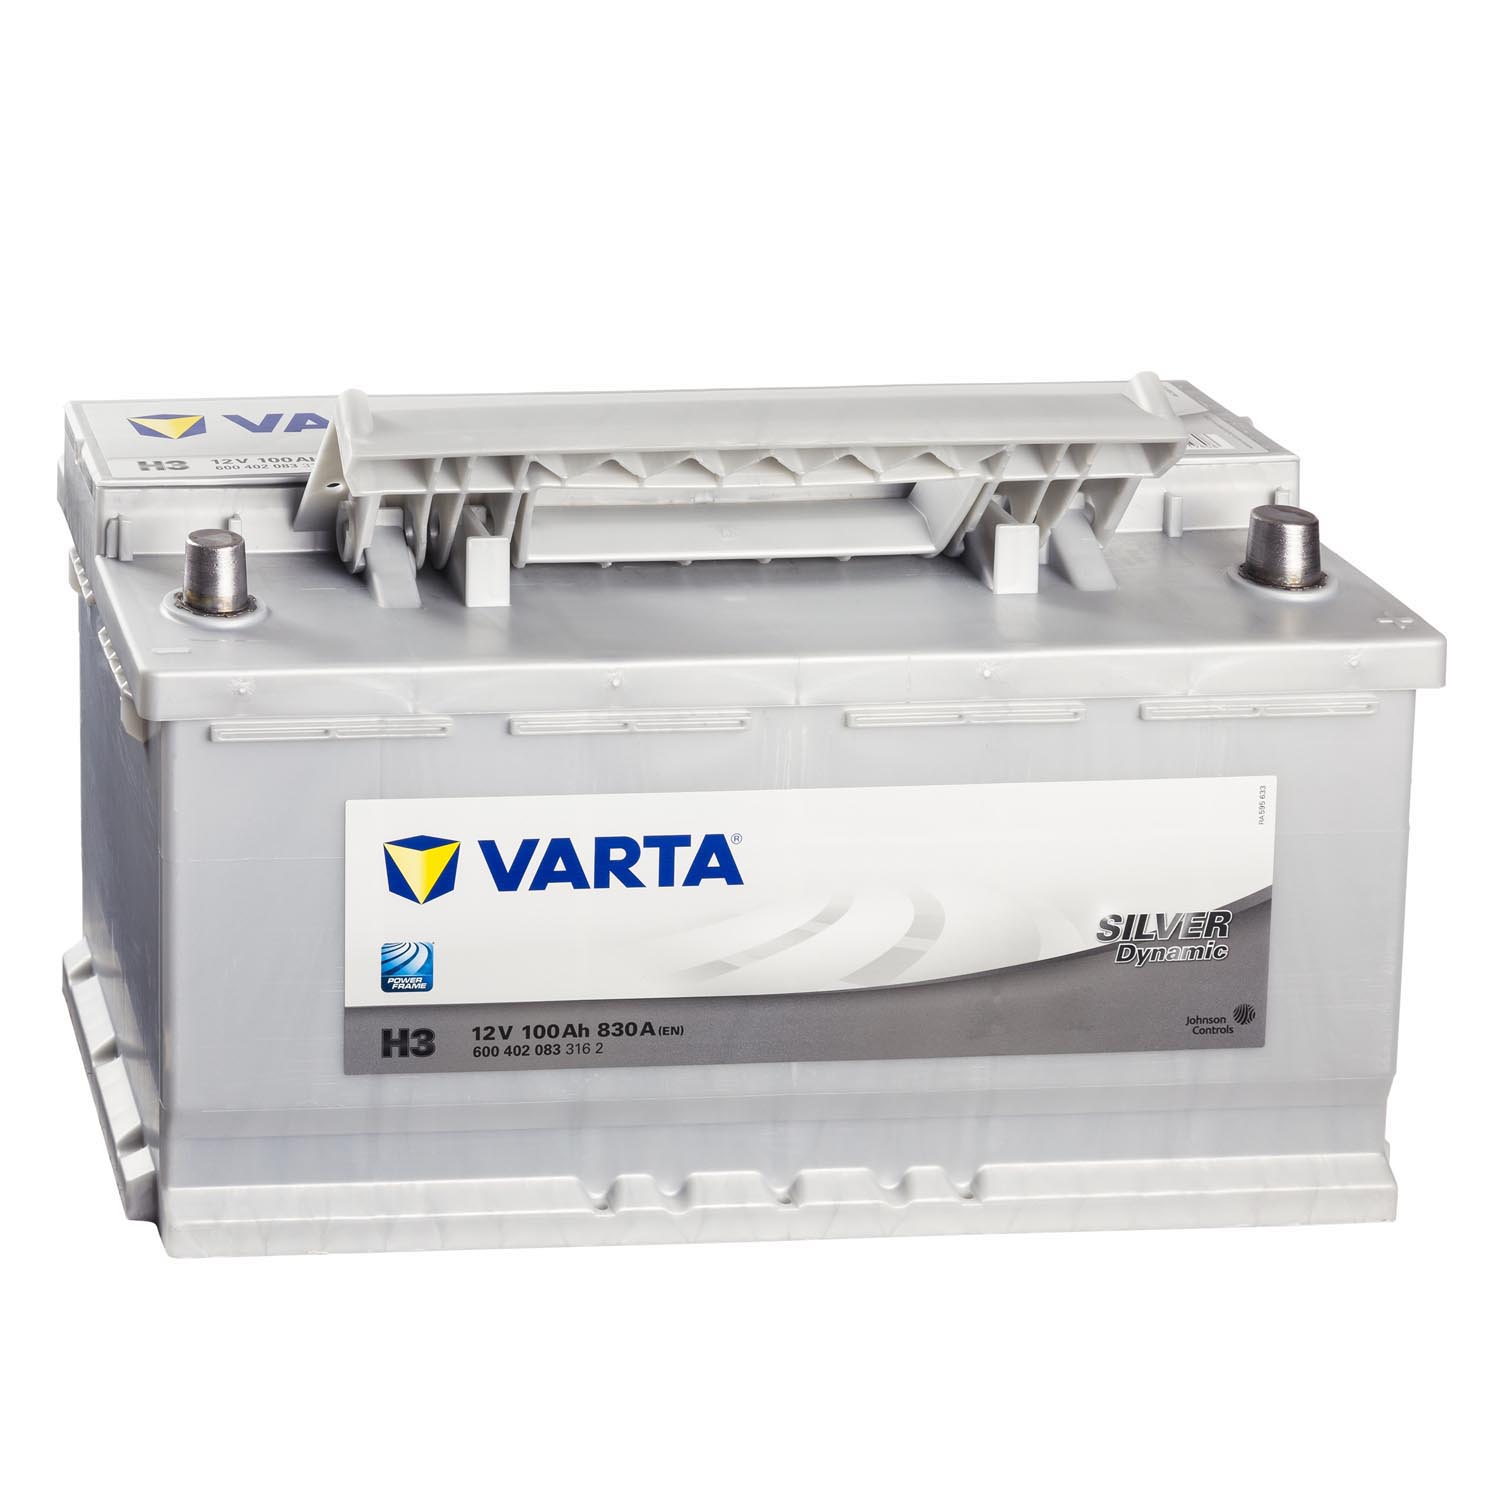 VARTA SILVER dynamic, H3 Batteria 6004020833162 12V, 830A, 100Ah